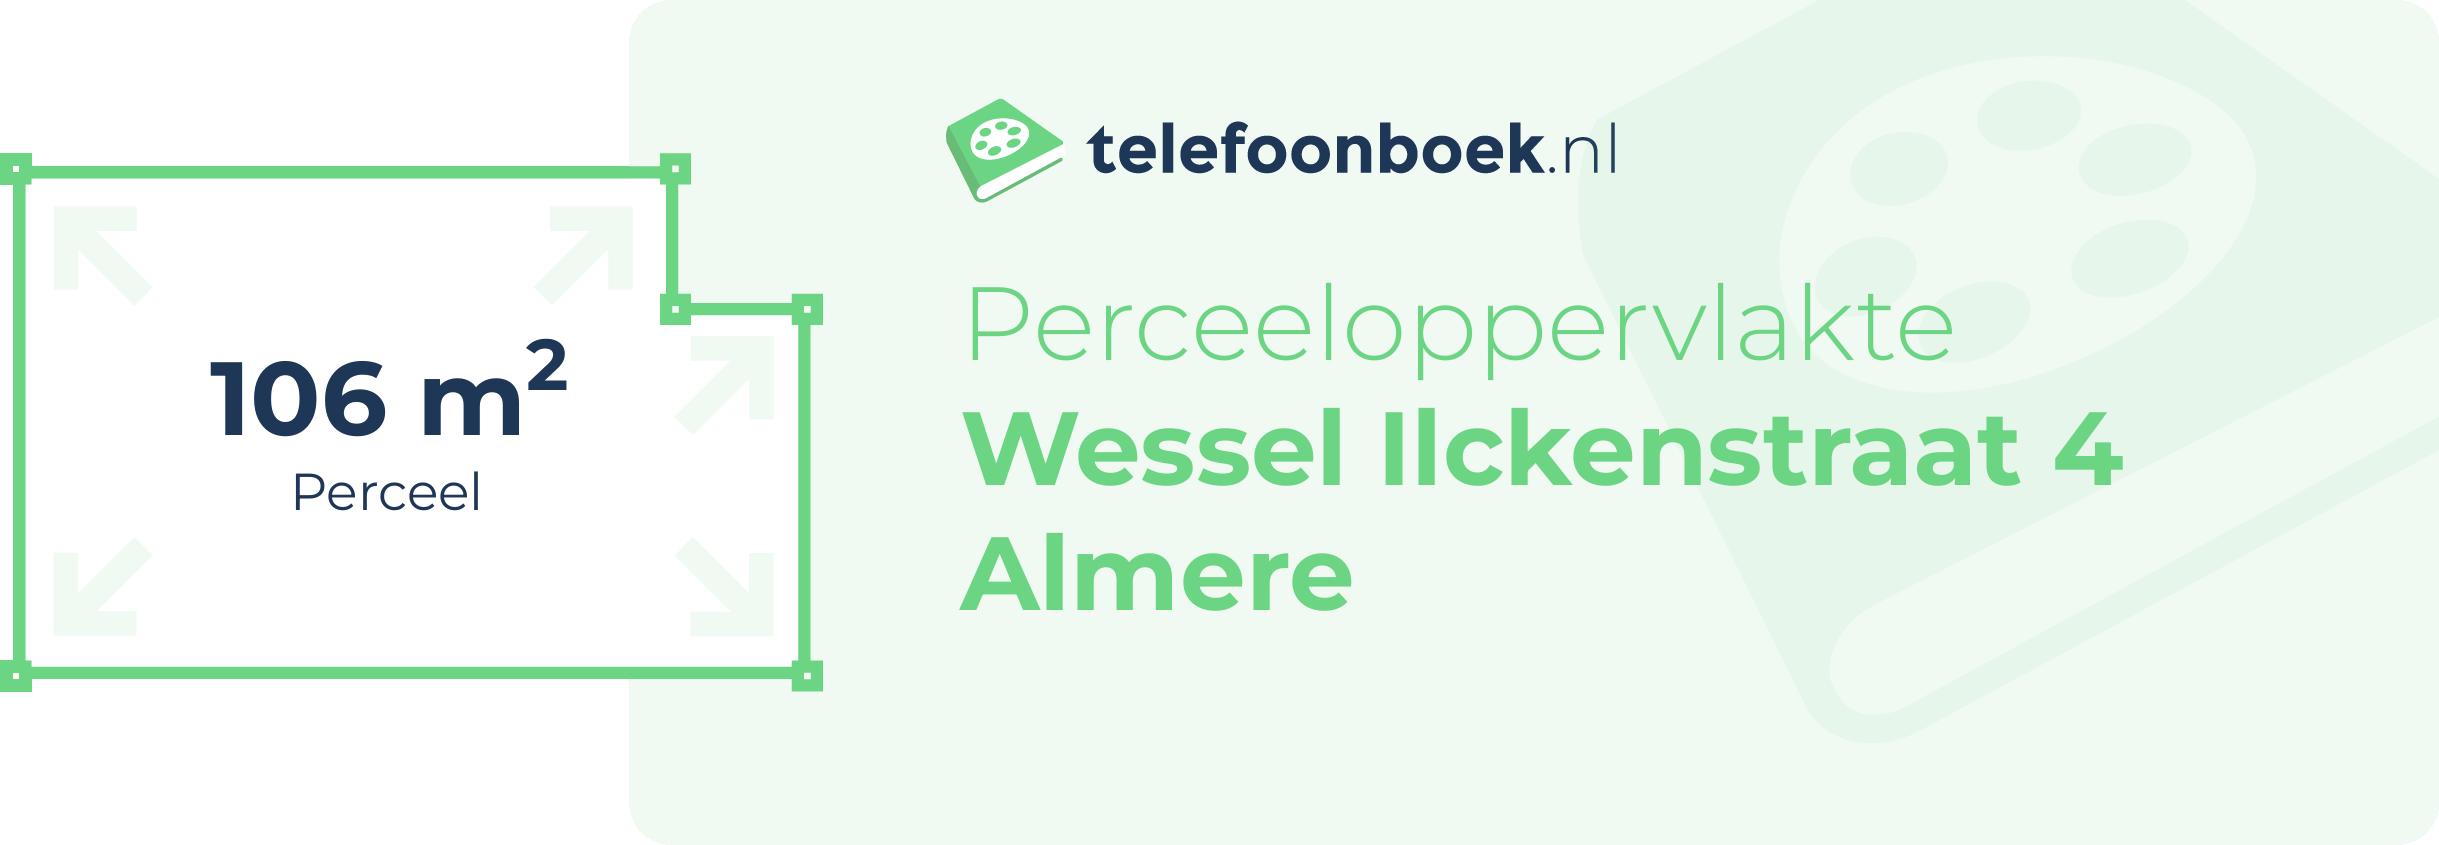 Perceeloppervlakte Wessel Ilckenstraat 4 Almere